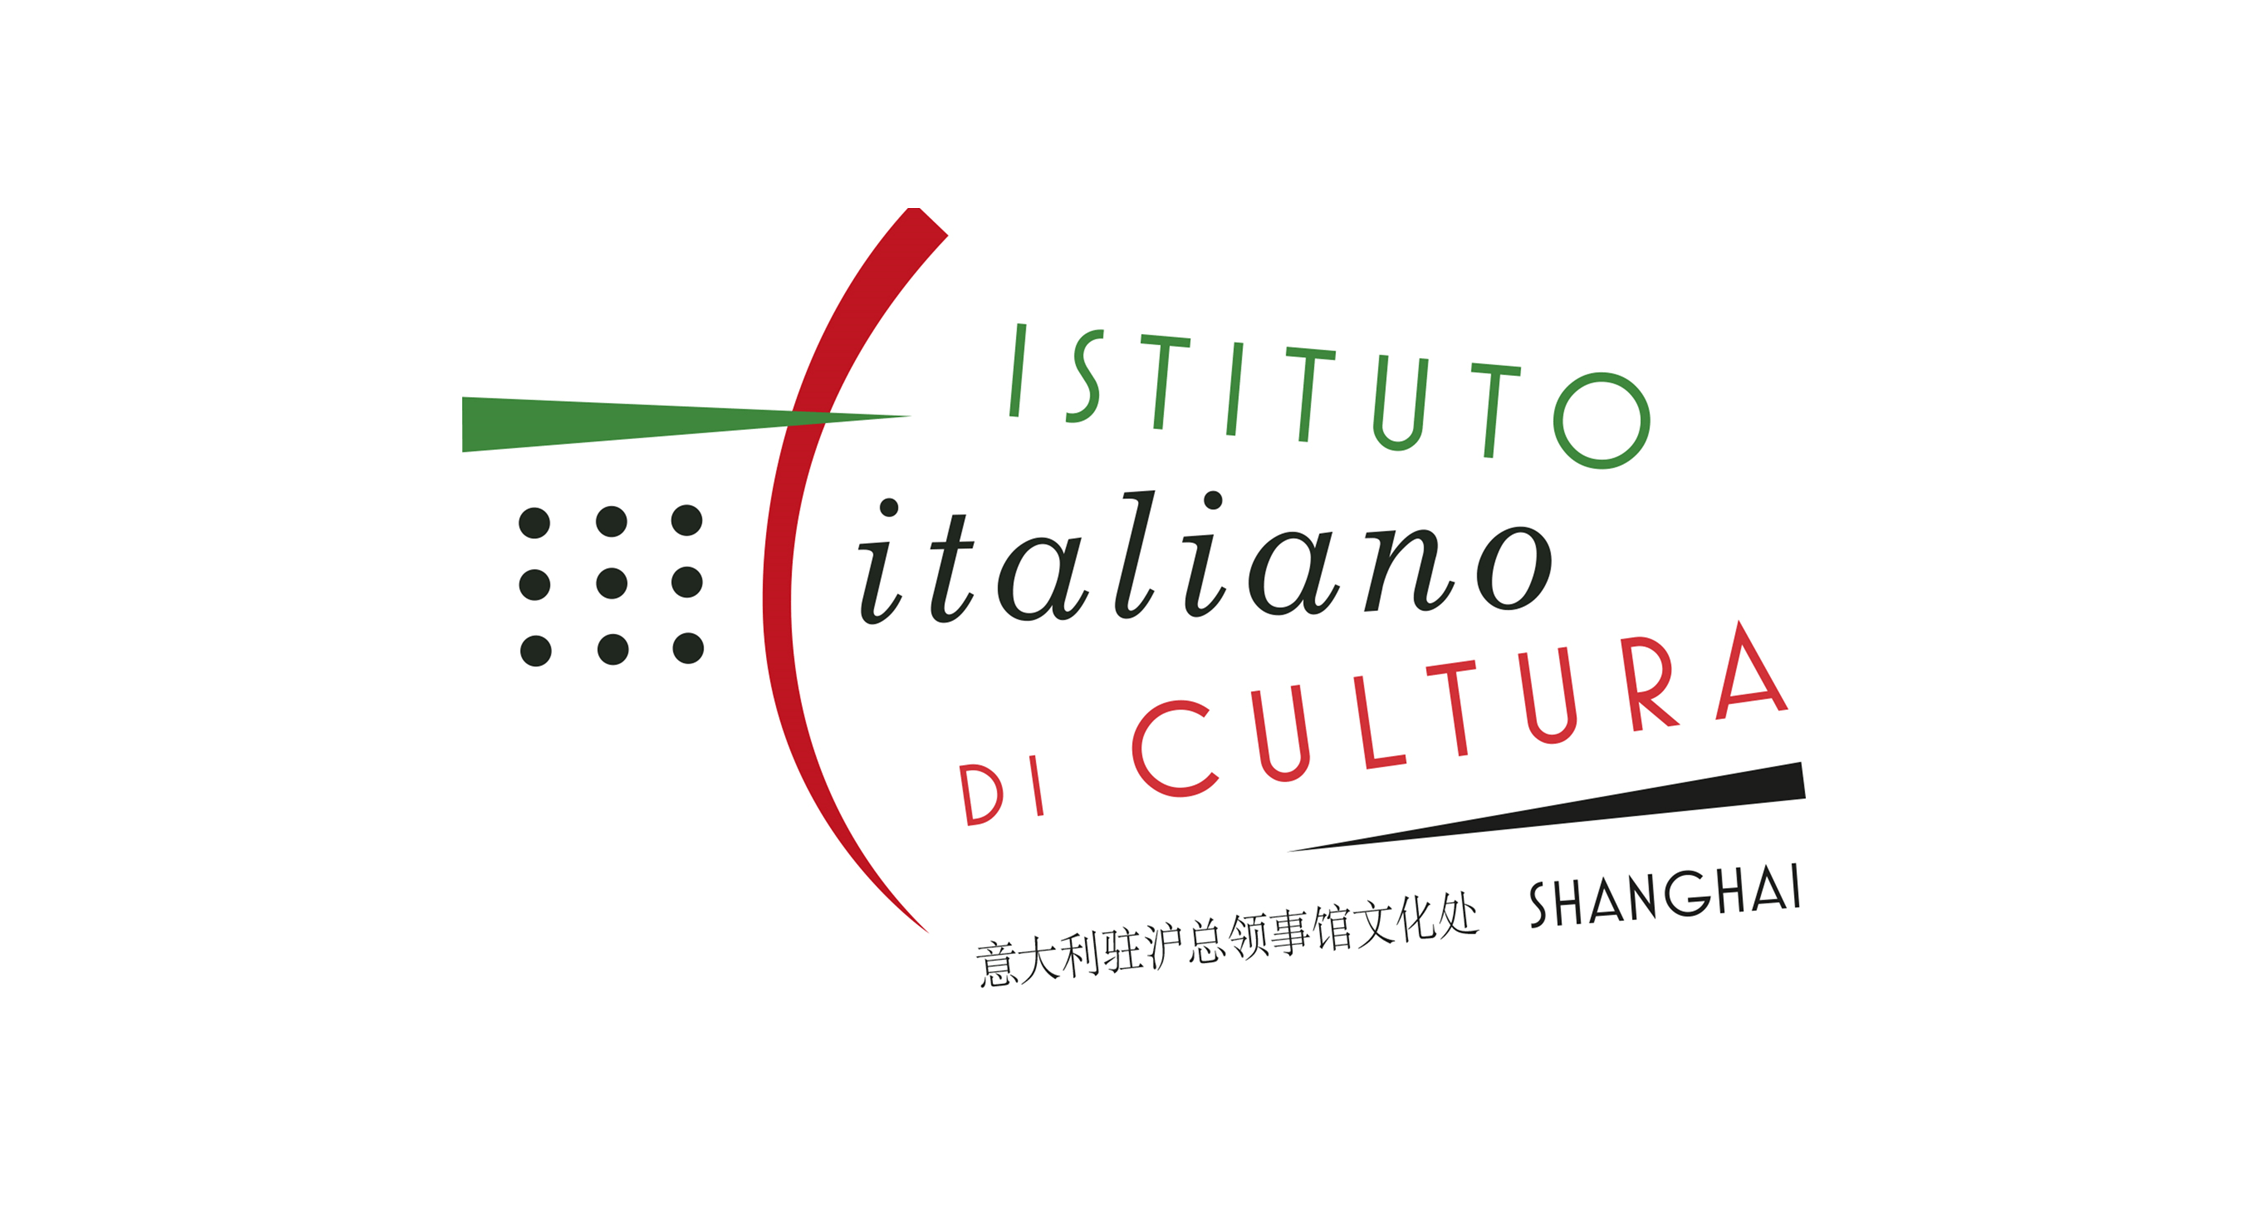 意大利驻沪总领事馆文化处 Istituto Italiano di Cultura Shanghai